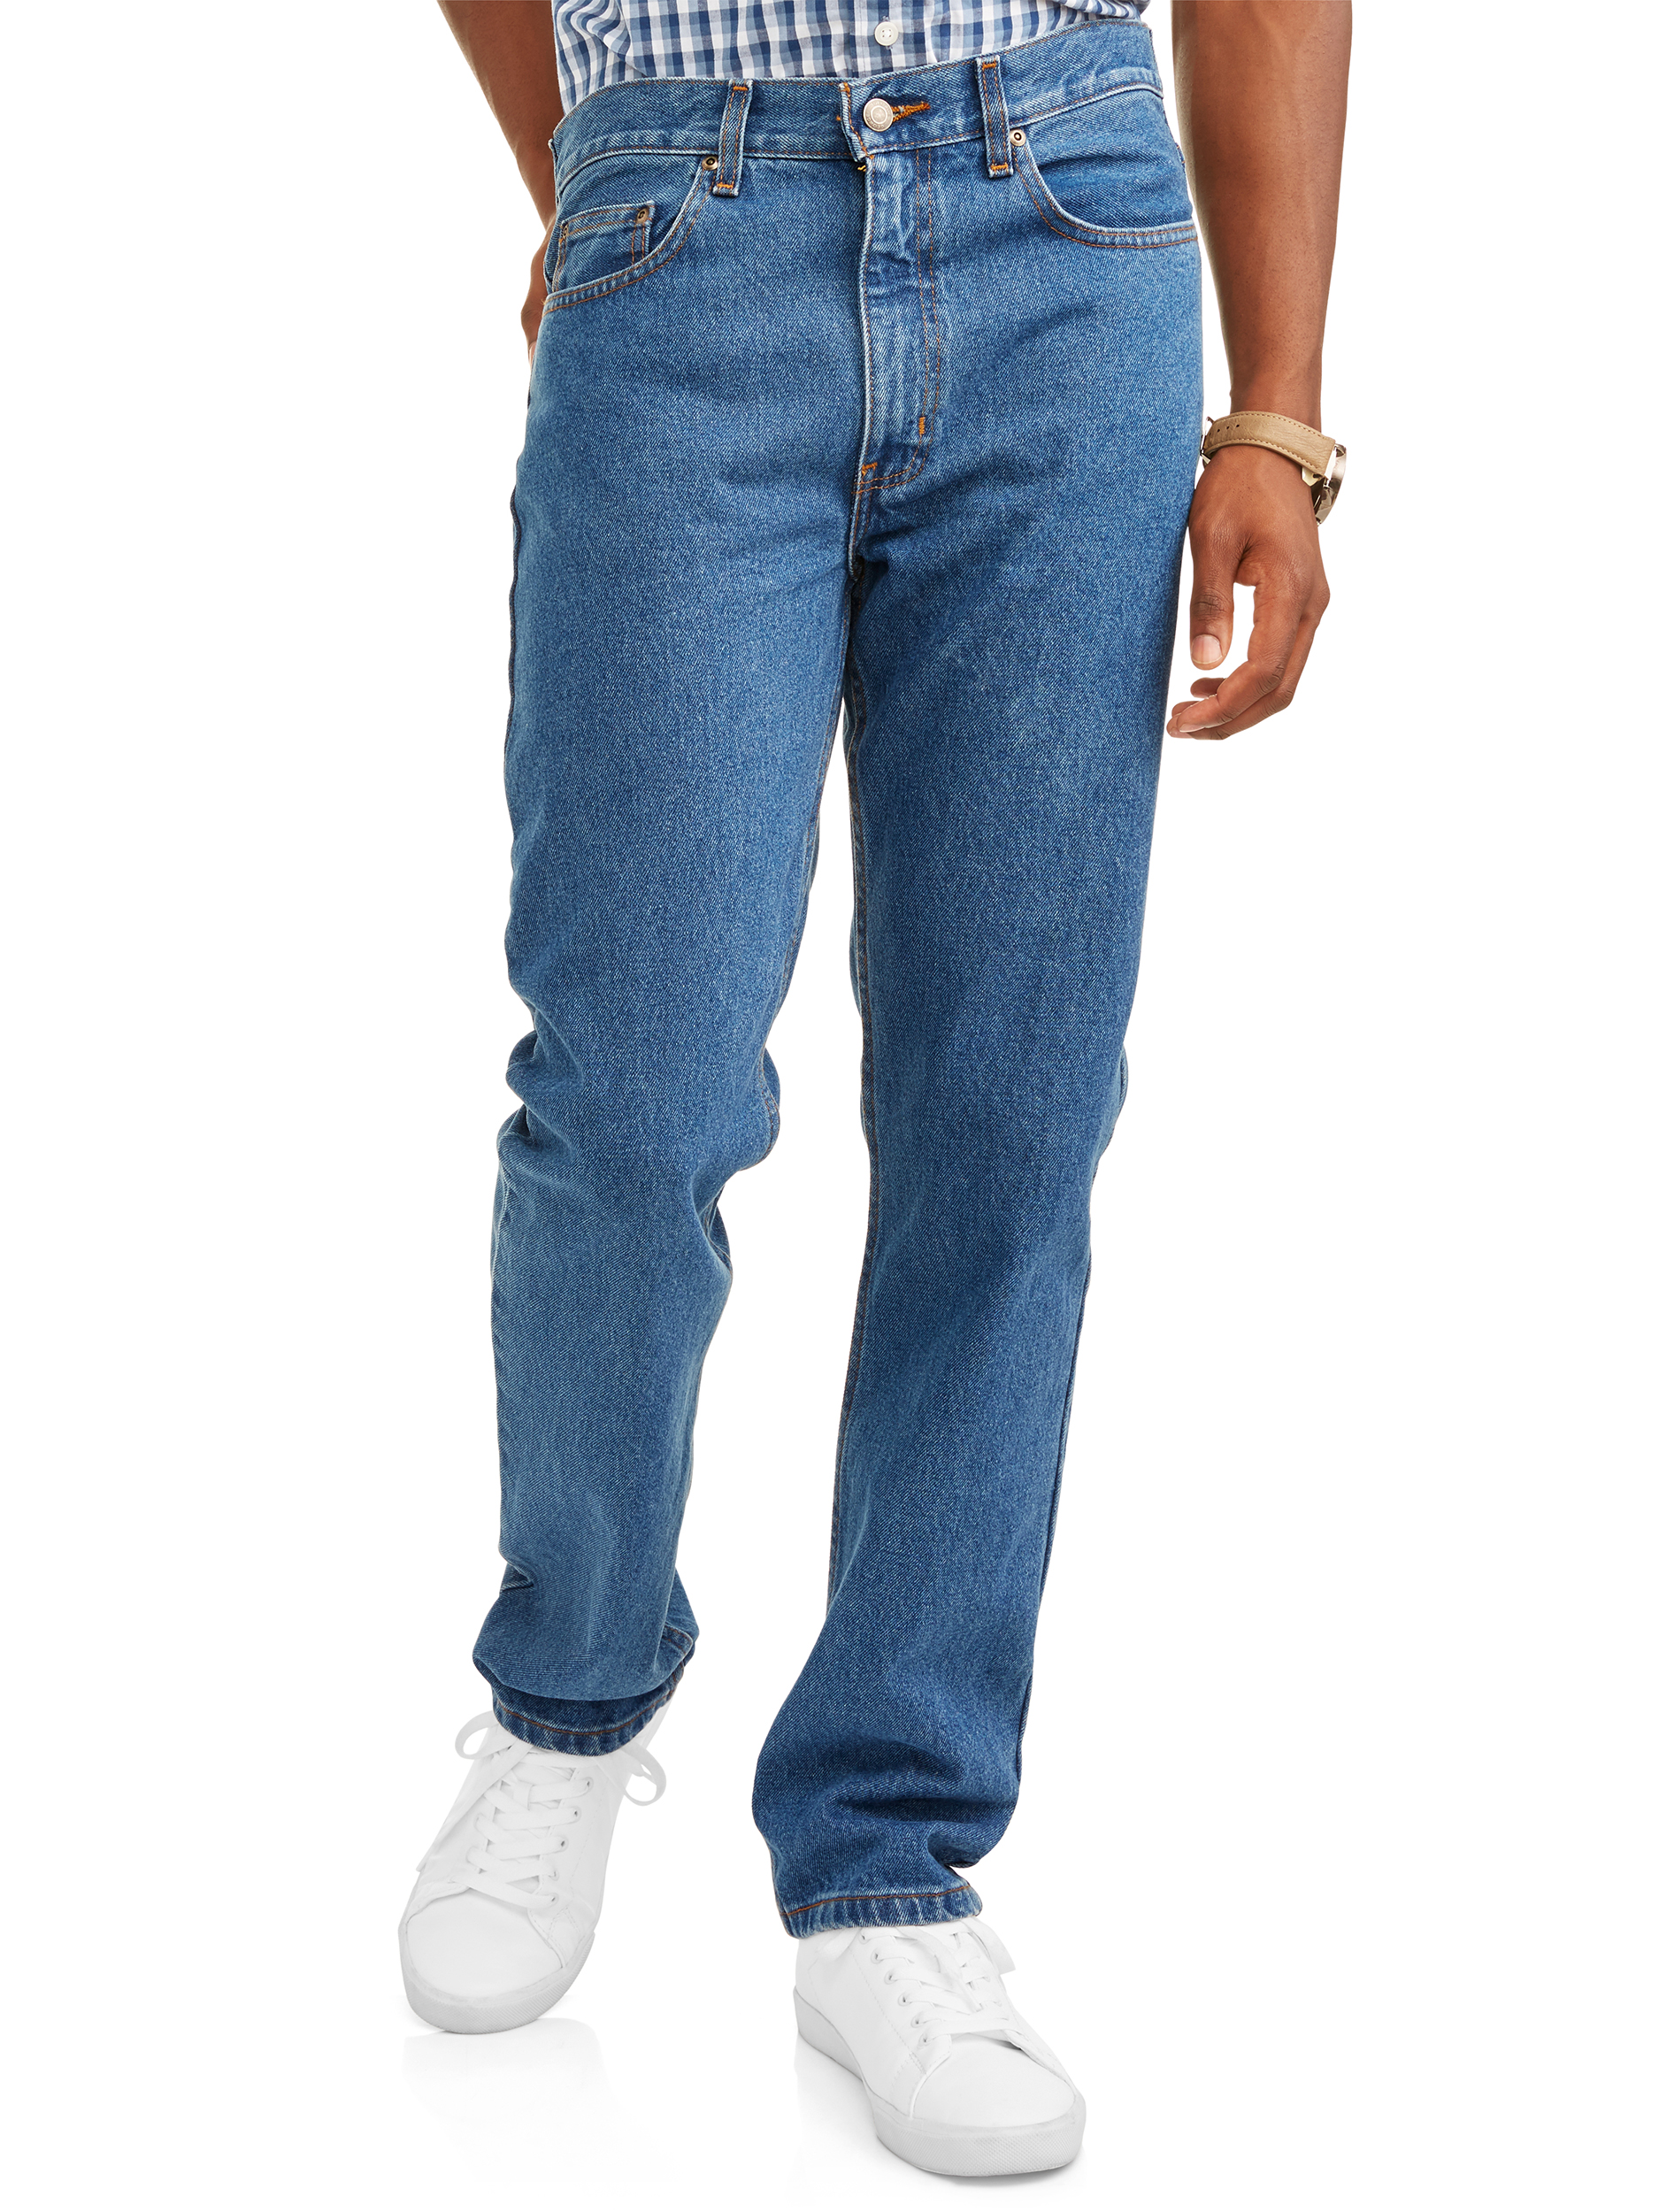 George Men's 100% Cotton Regular Fit Jeans, 2-Pack - image 4 of 7